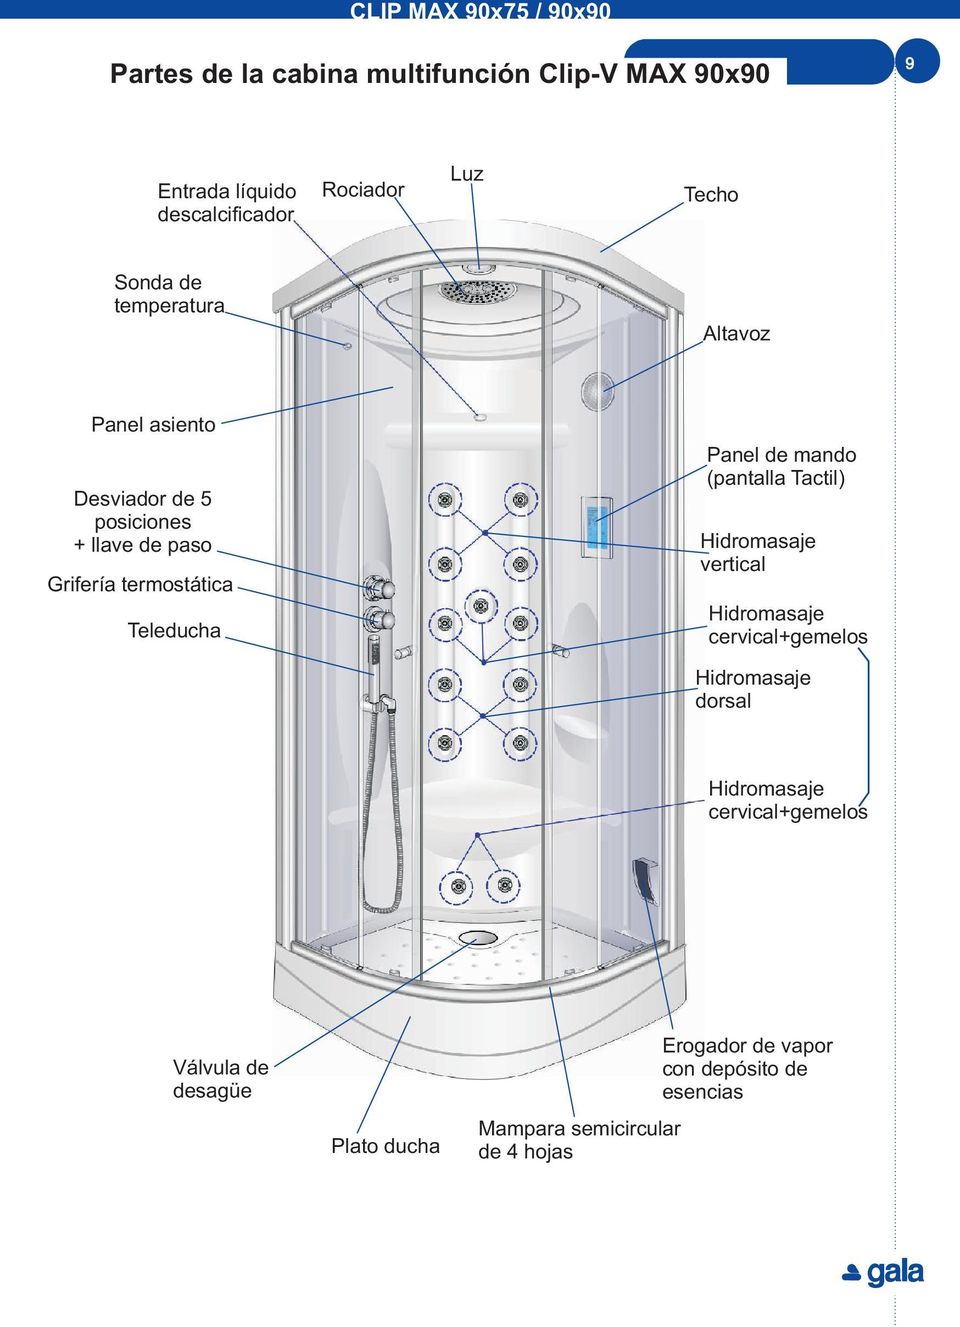 termostática Teleducha Panel de mando (pantalla Tactil) vertical cervical+gemelos dorsal